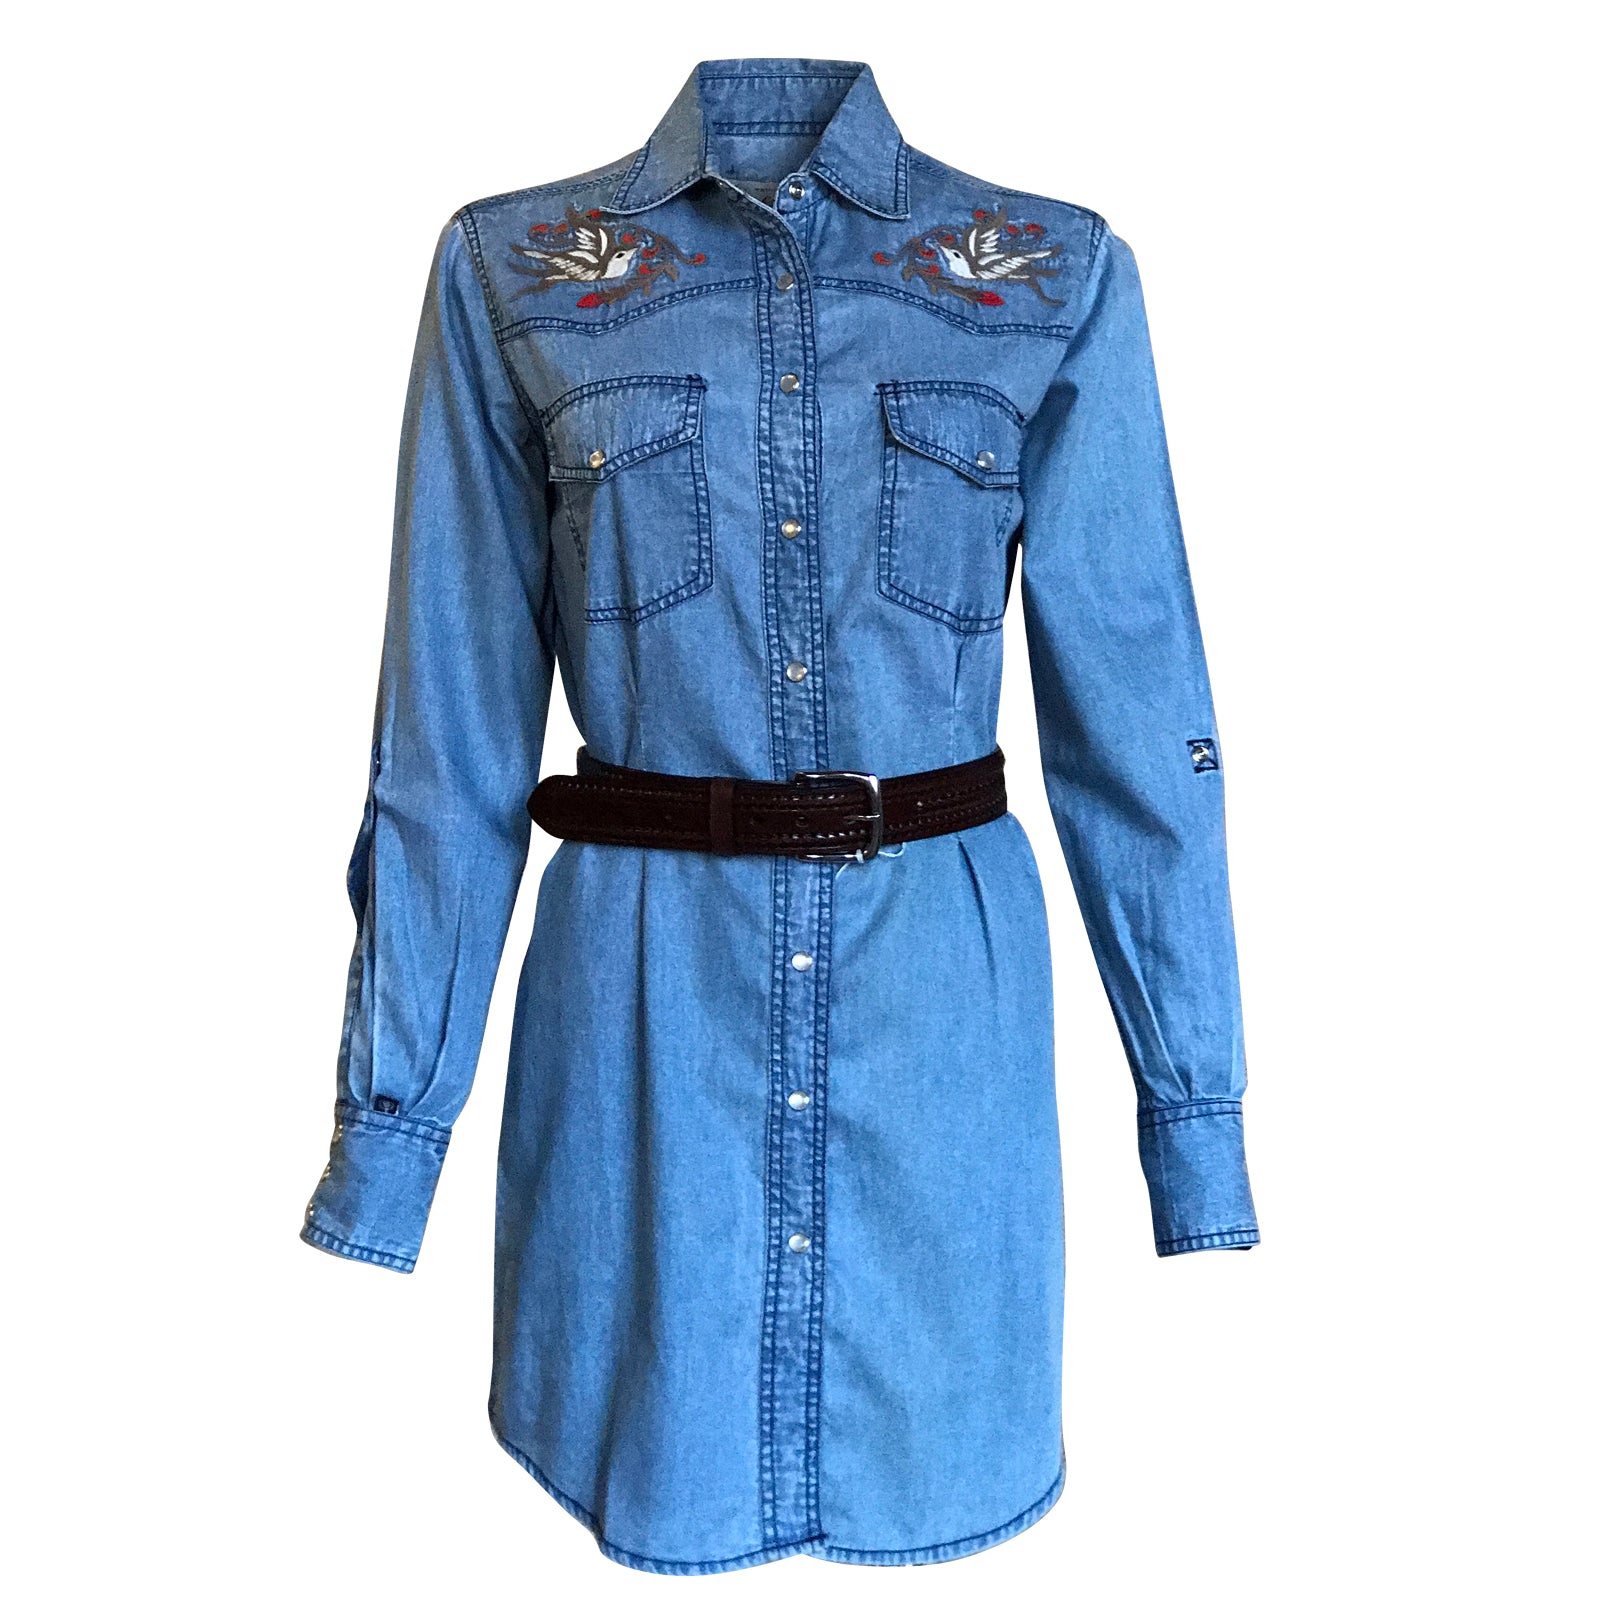 Buy Twenty Dresses Blue Denim Shirt for Women's Online @ Tata CLiQ